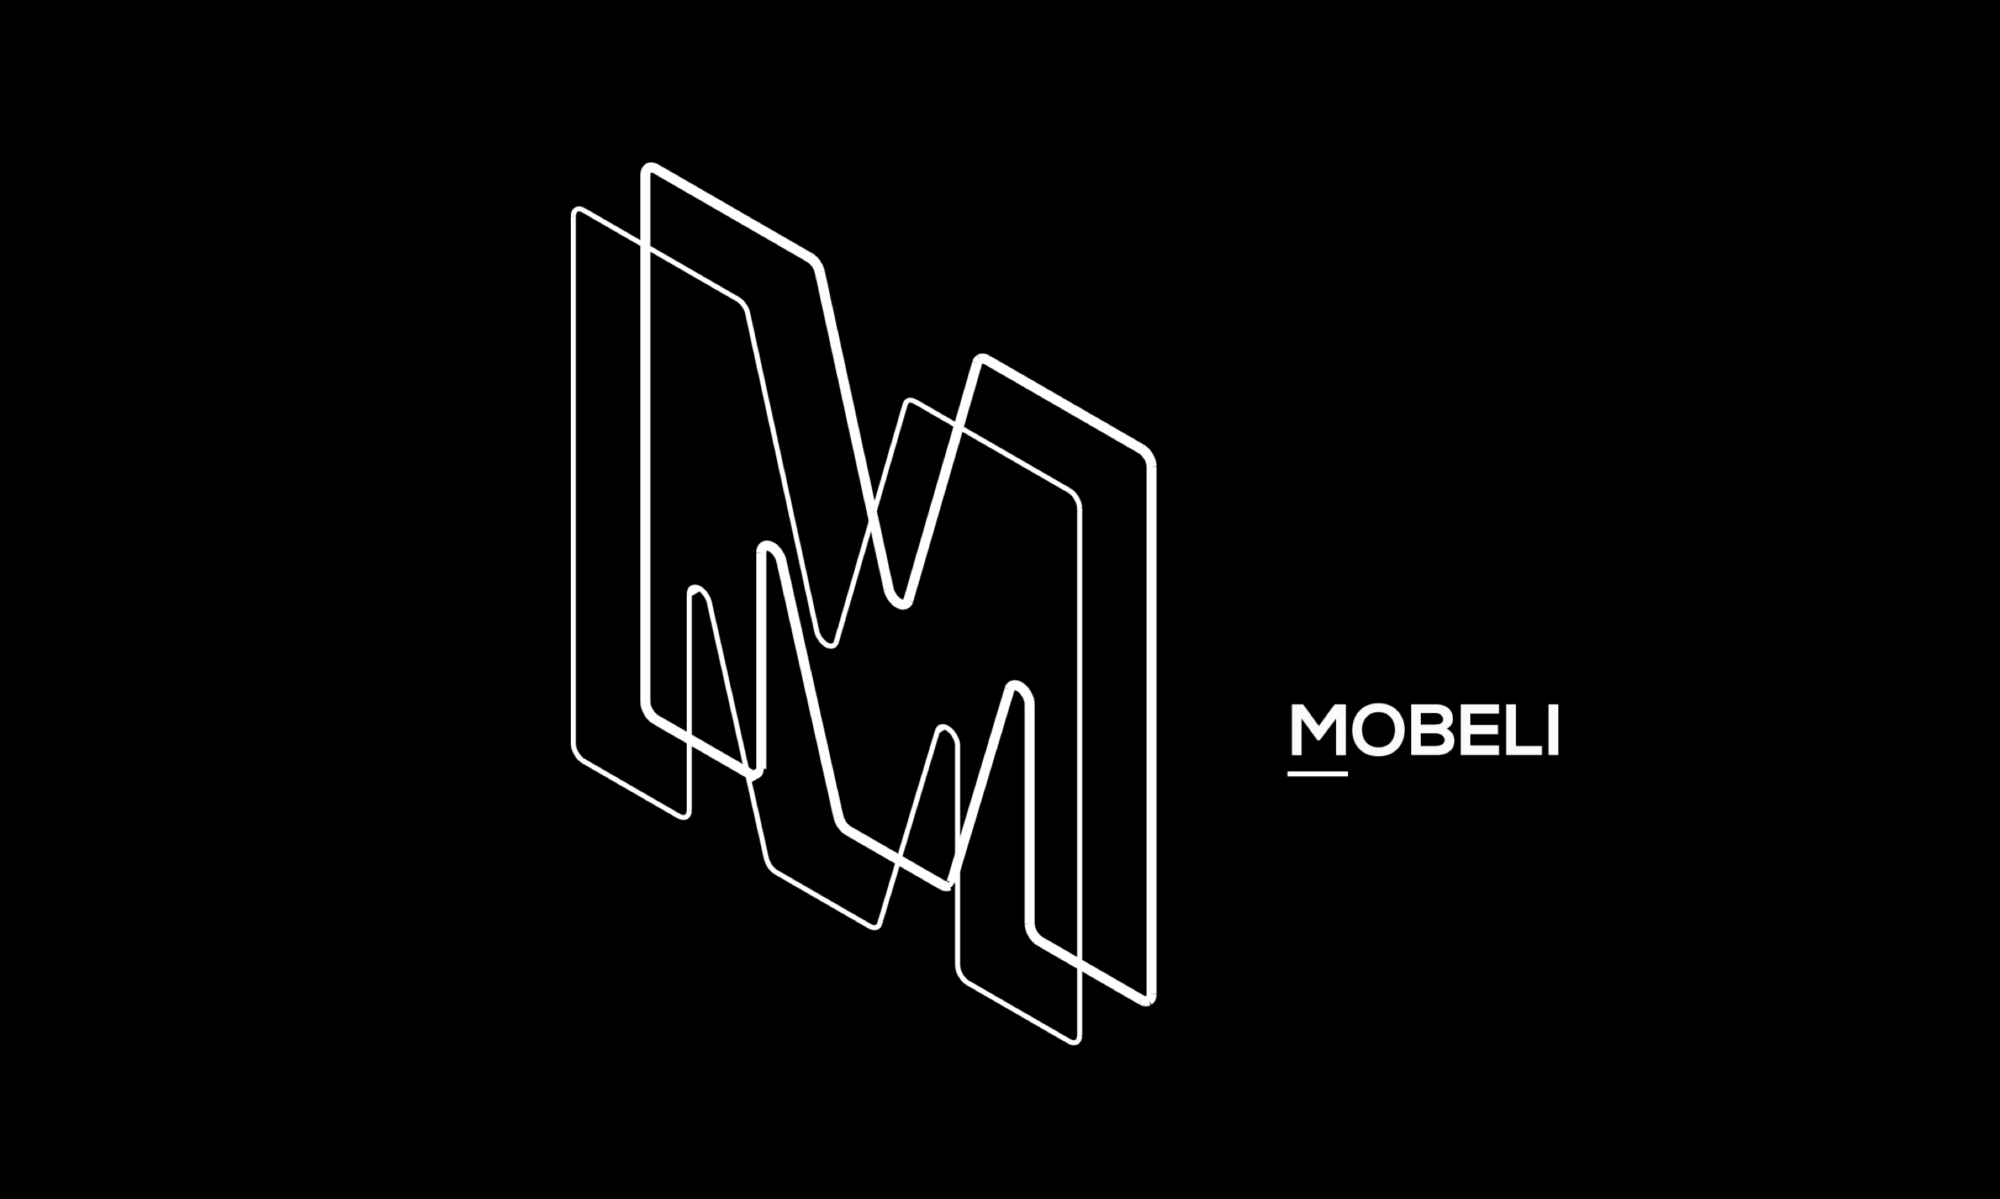 Mobeli